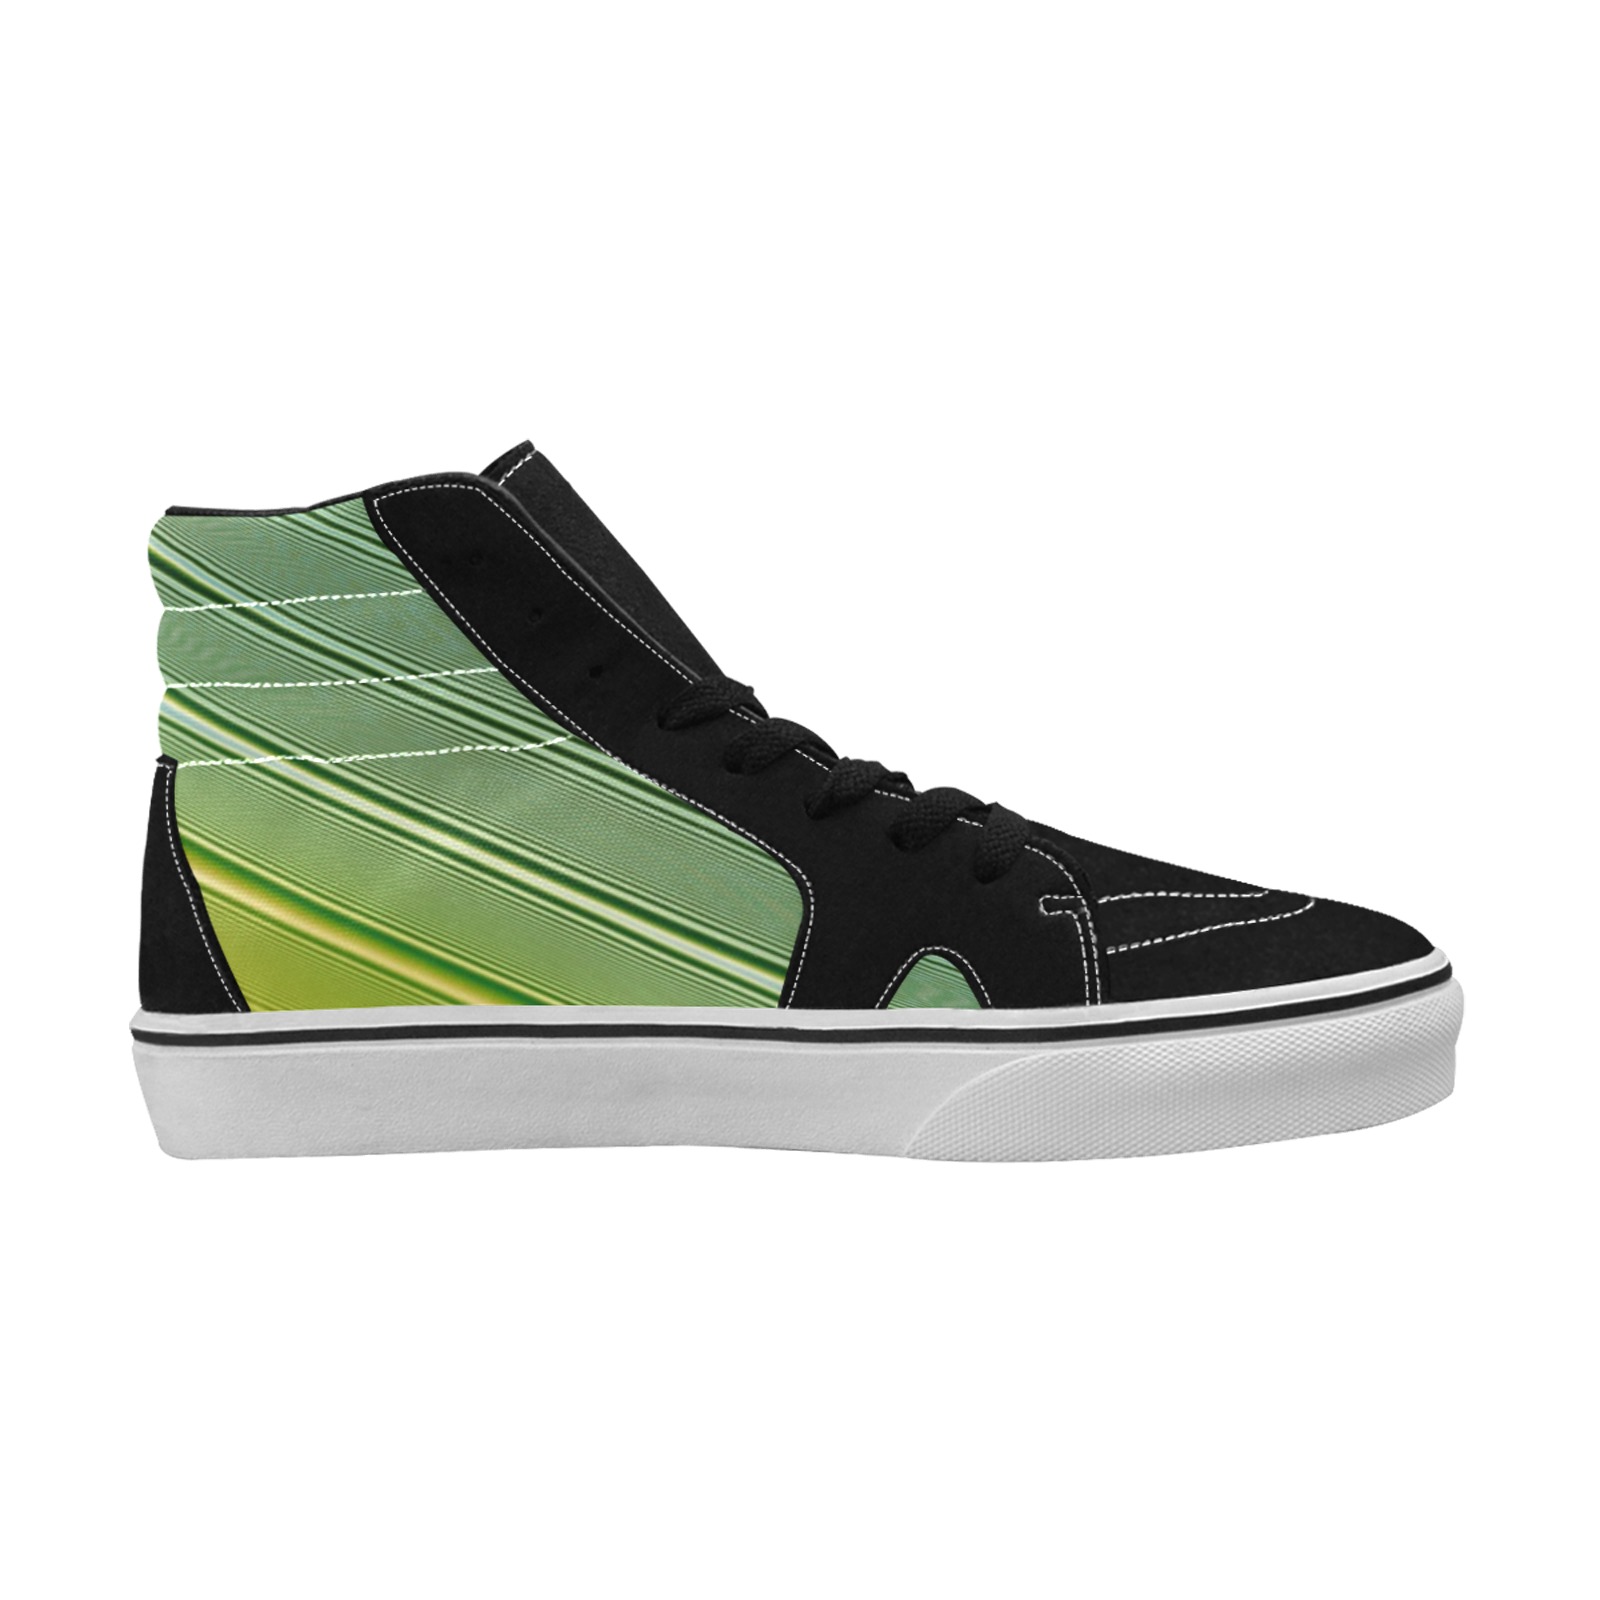 gradientcolors (64) Women's High Top Skateboarding Shoes (Model E001-1)